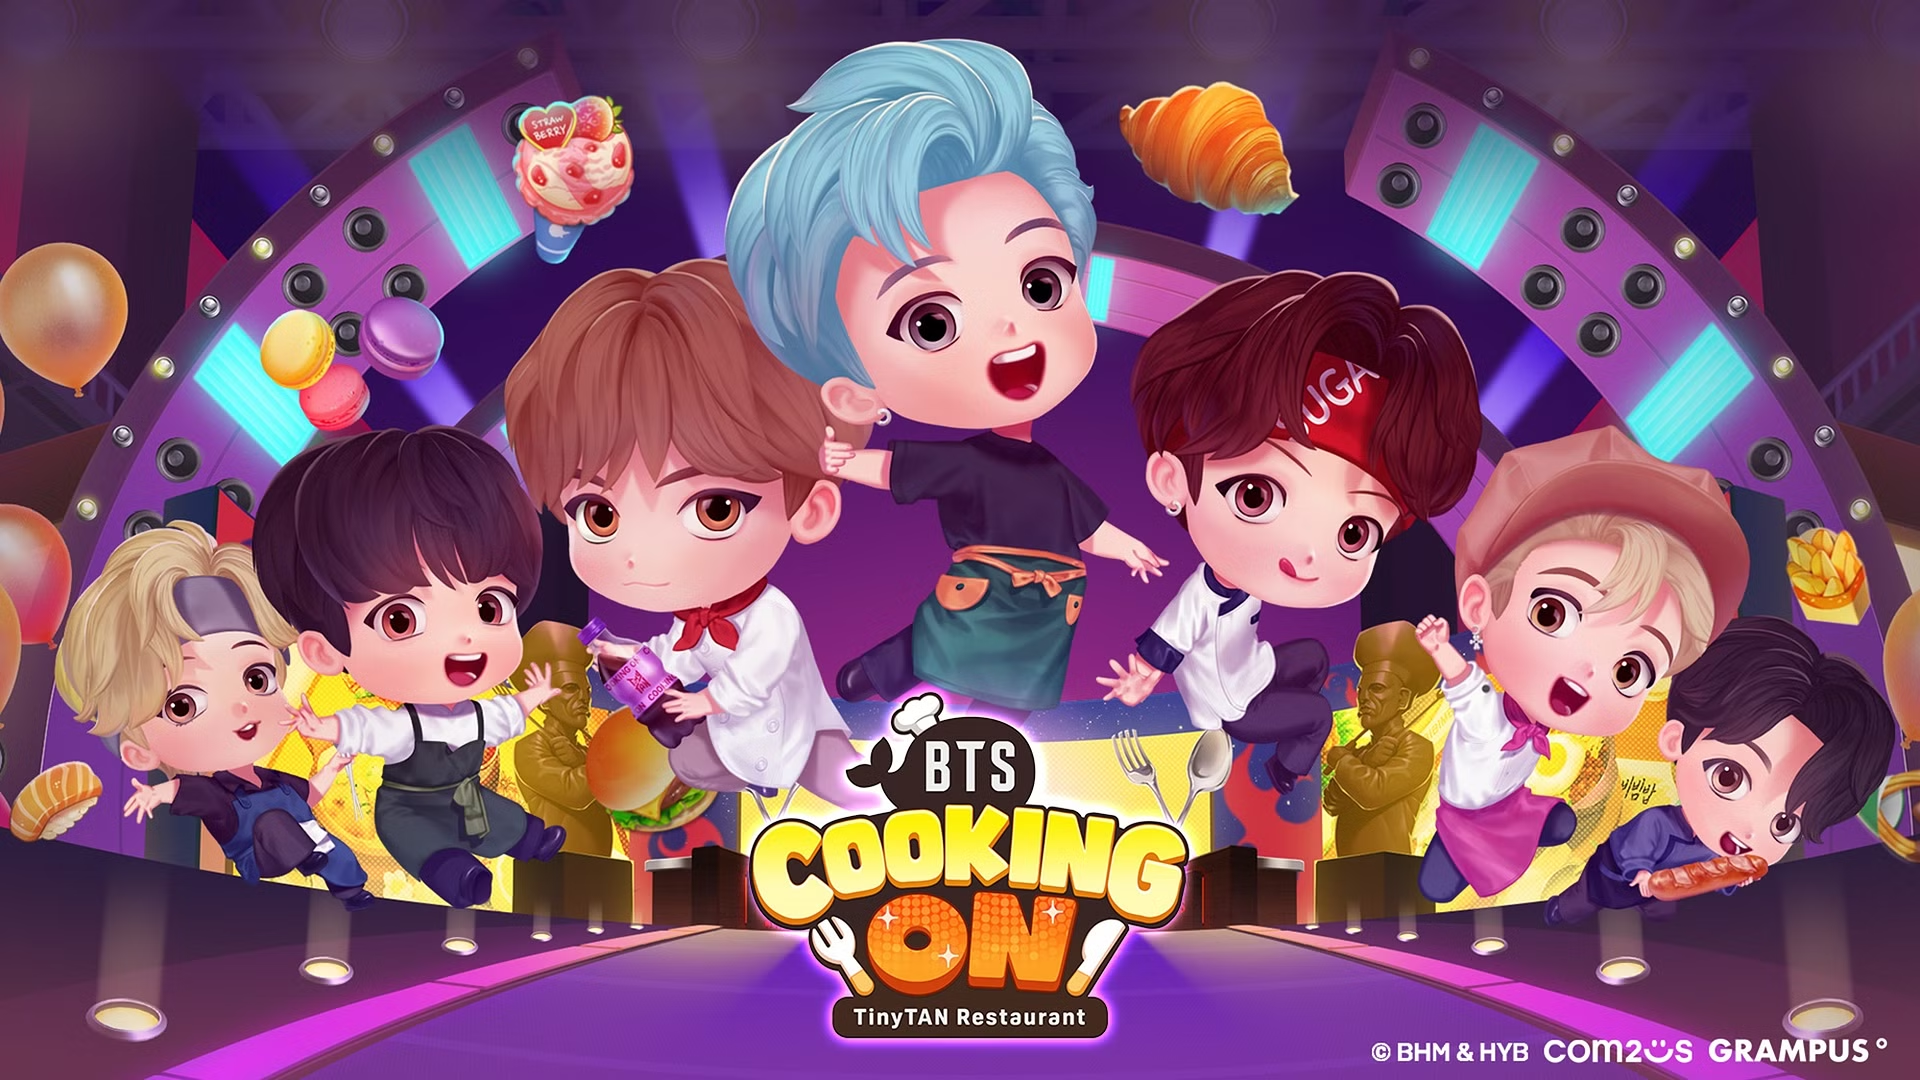 BTS Cooking On: TinyTAN Restaurant